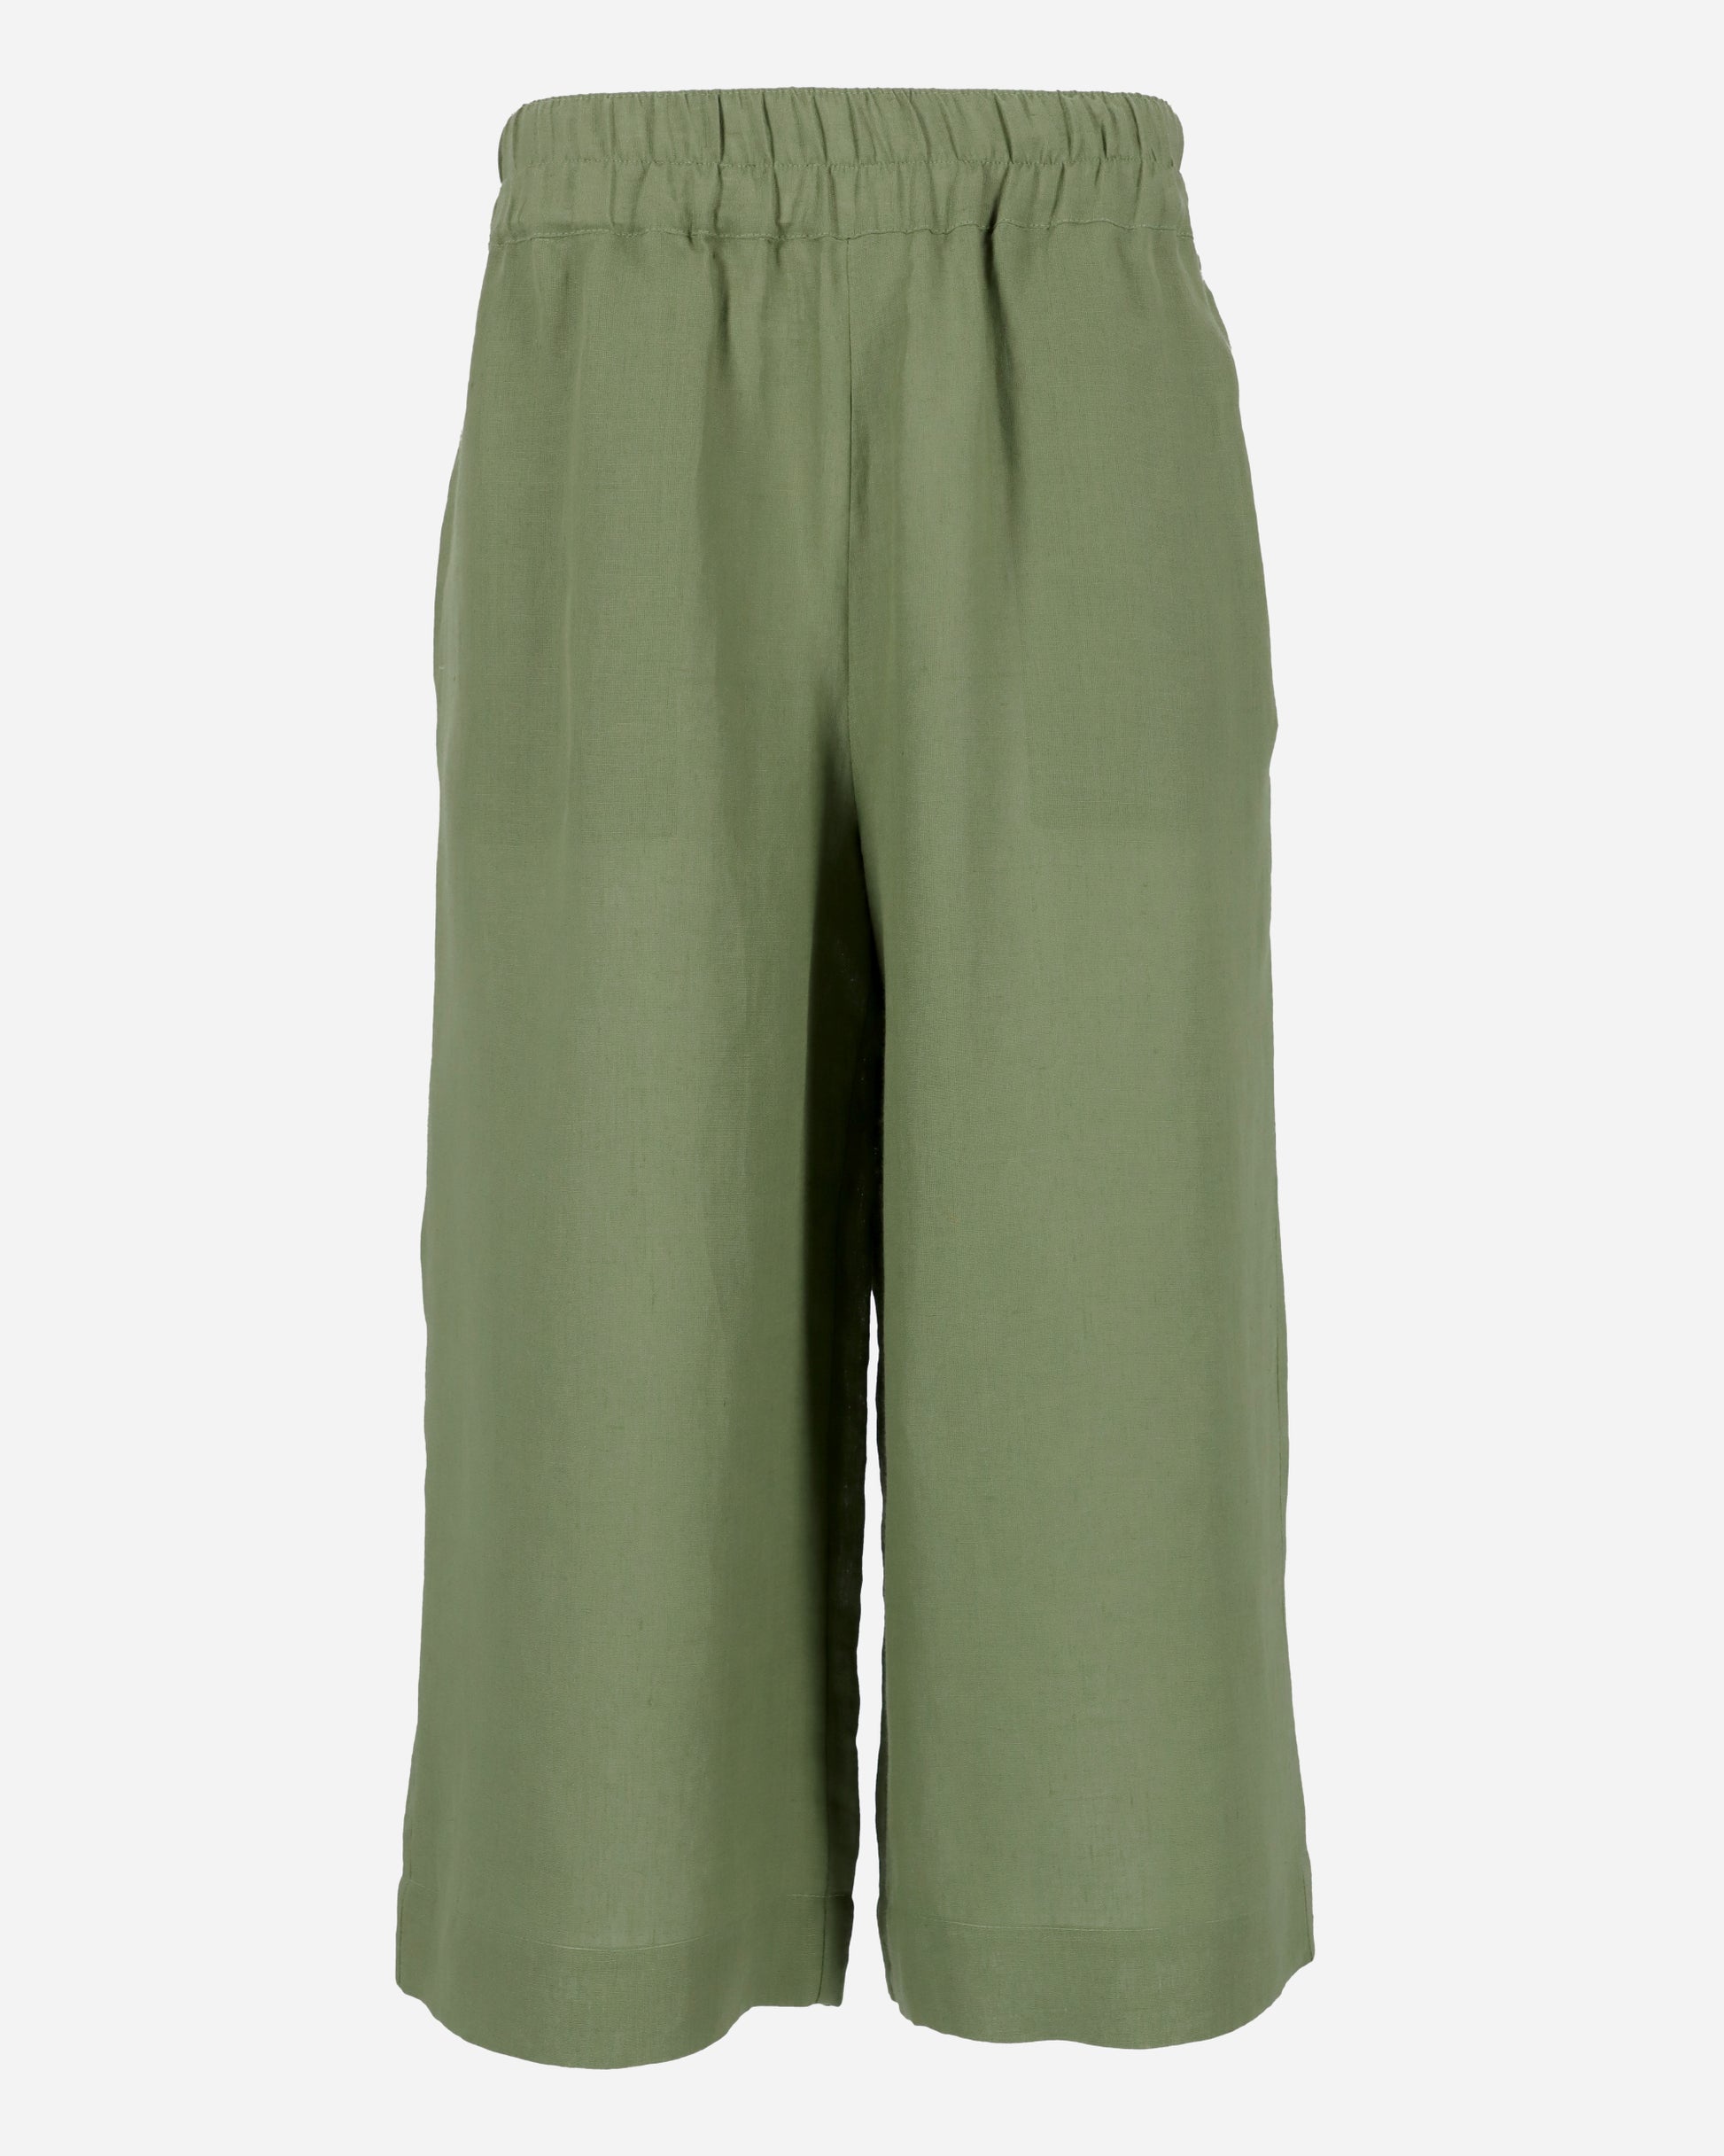 Wide leg linen culotte pants BRUNY in Forest green - MagicLinen